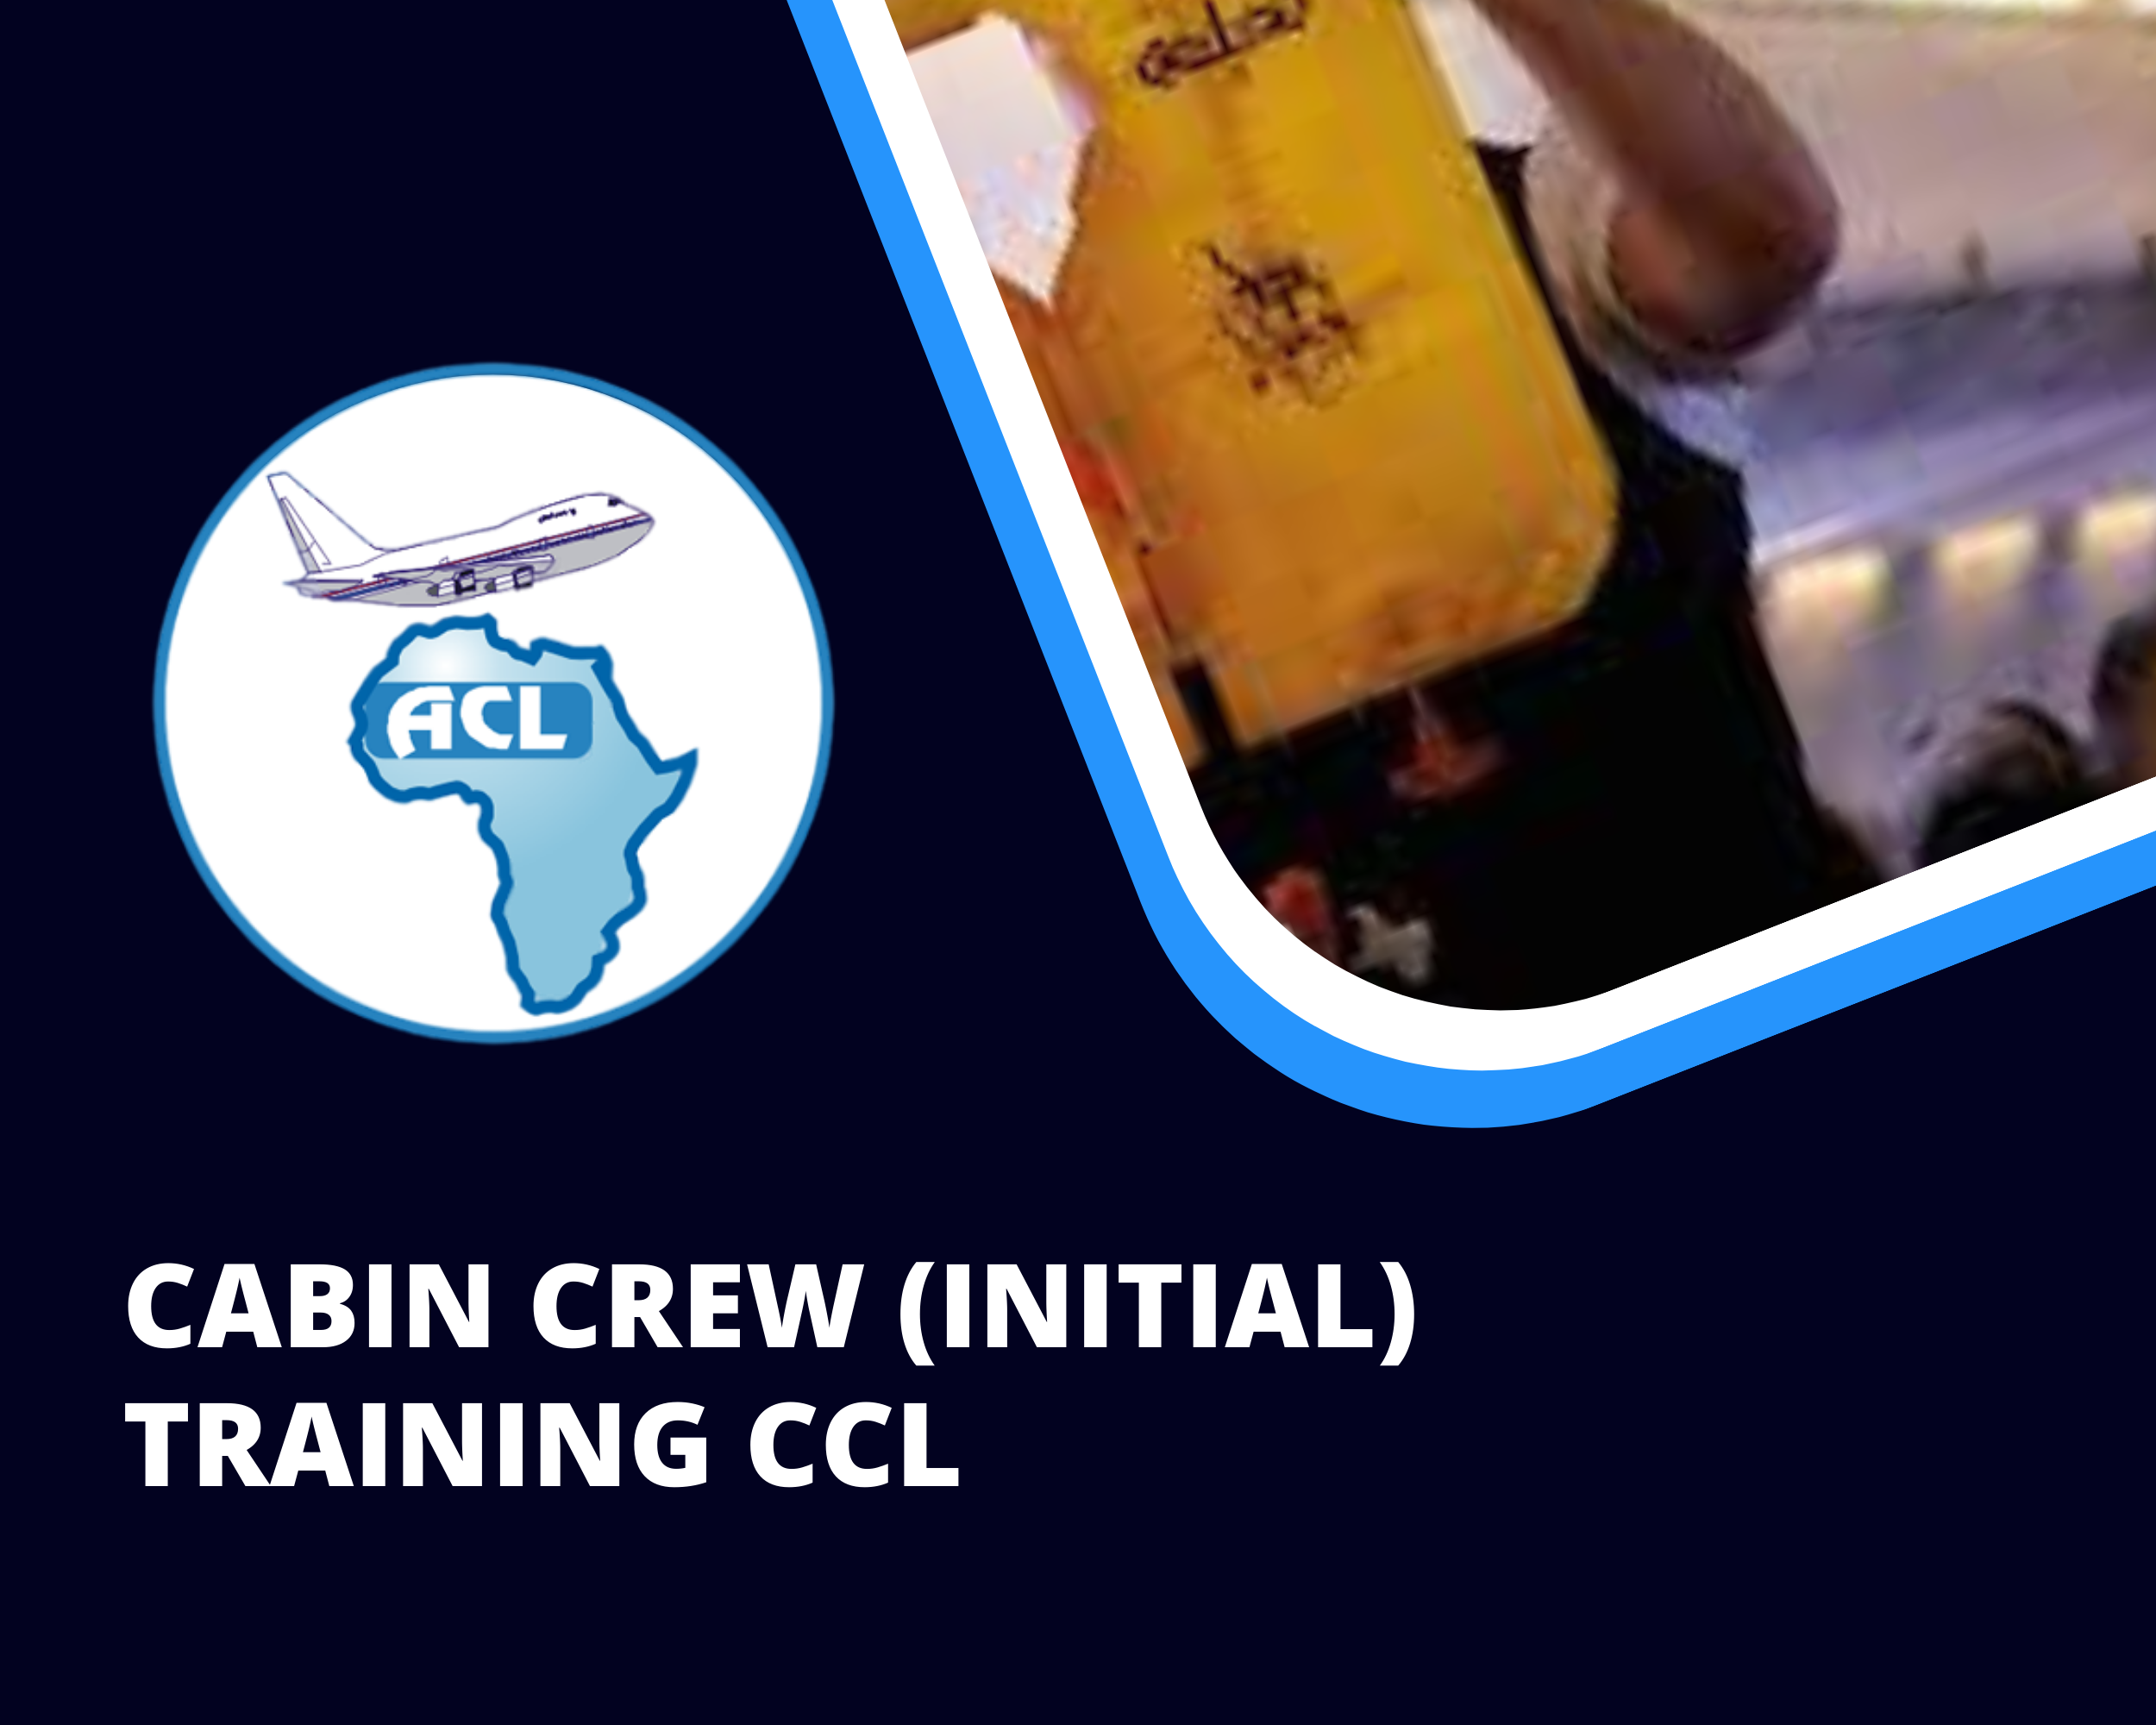 CABIN CREW (INITIAL) TRAINING CCL